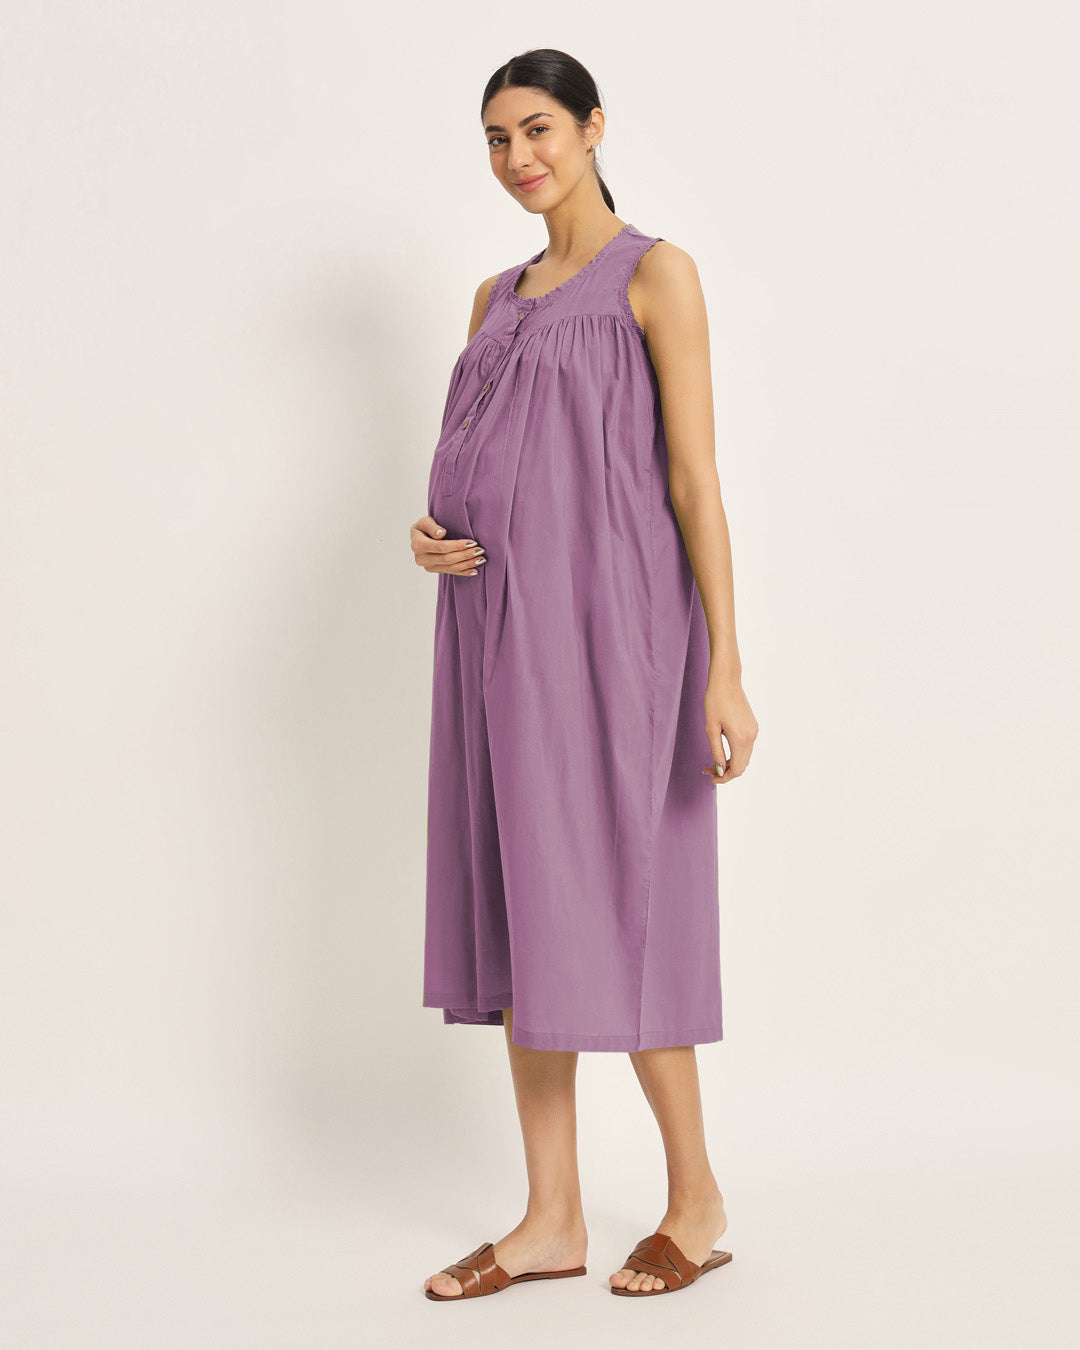 Combo: Iris Pink & Wisteria Purple Pregnan-Queen Maternity & Nursing Dress